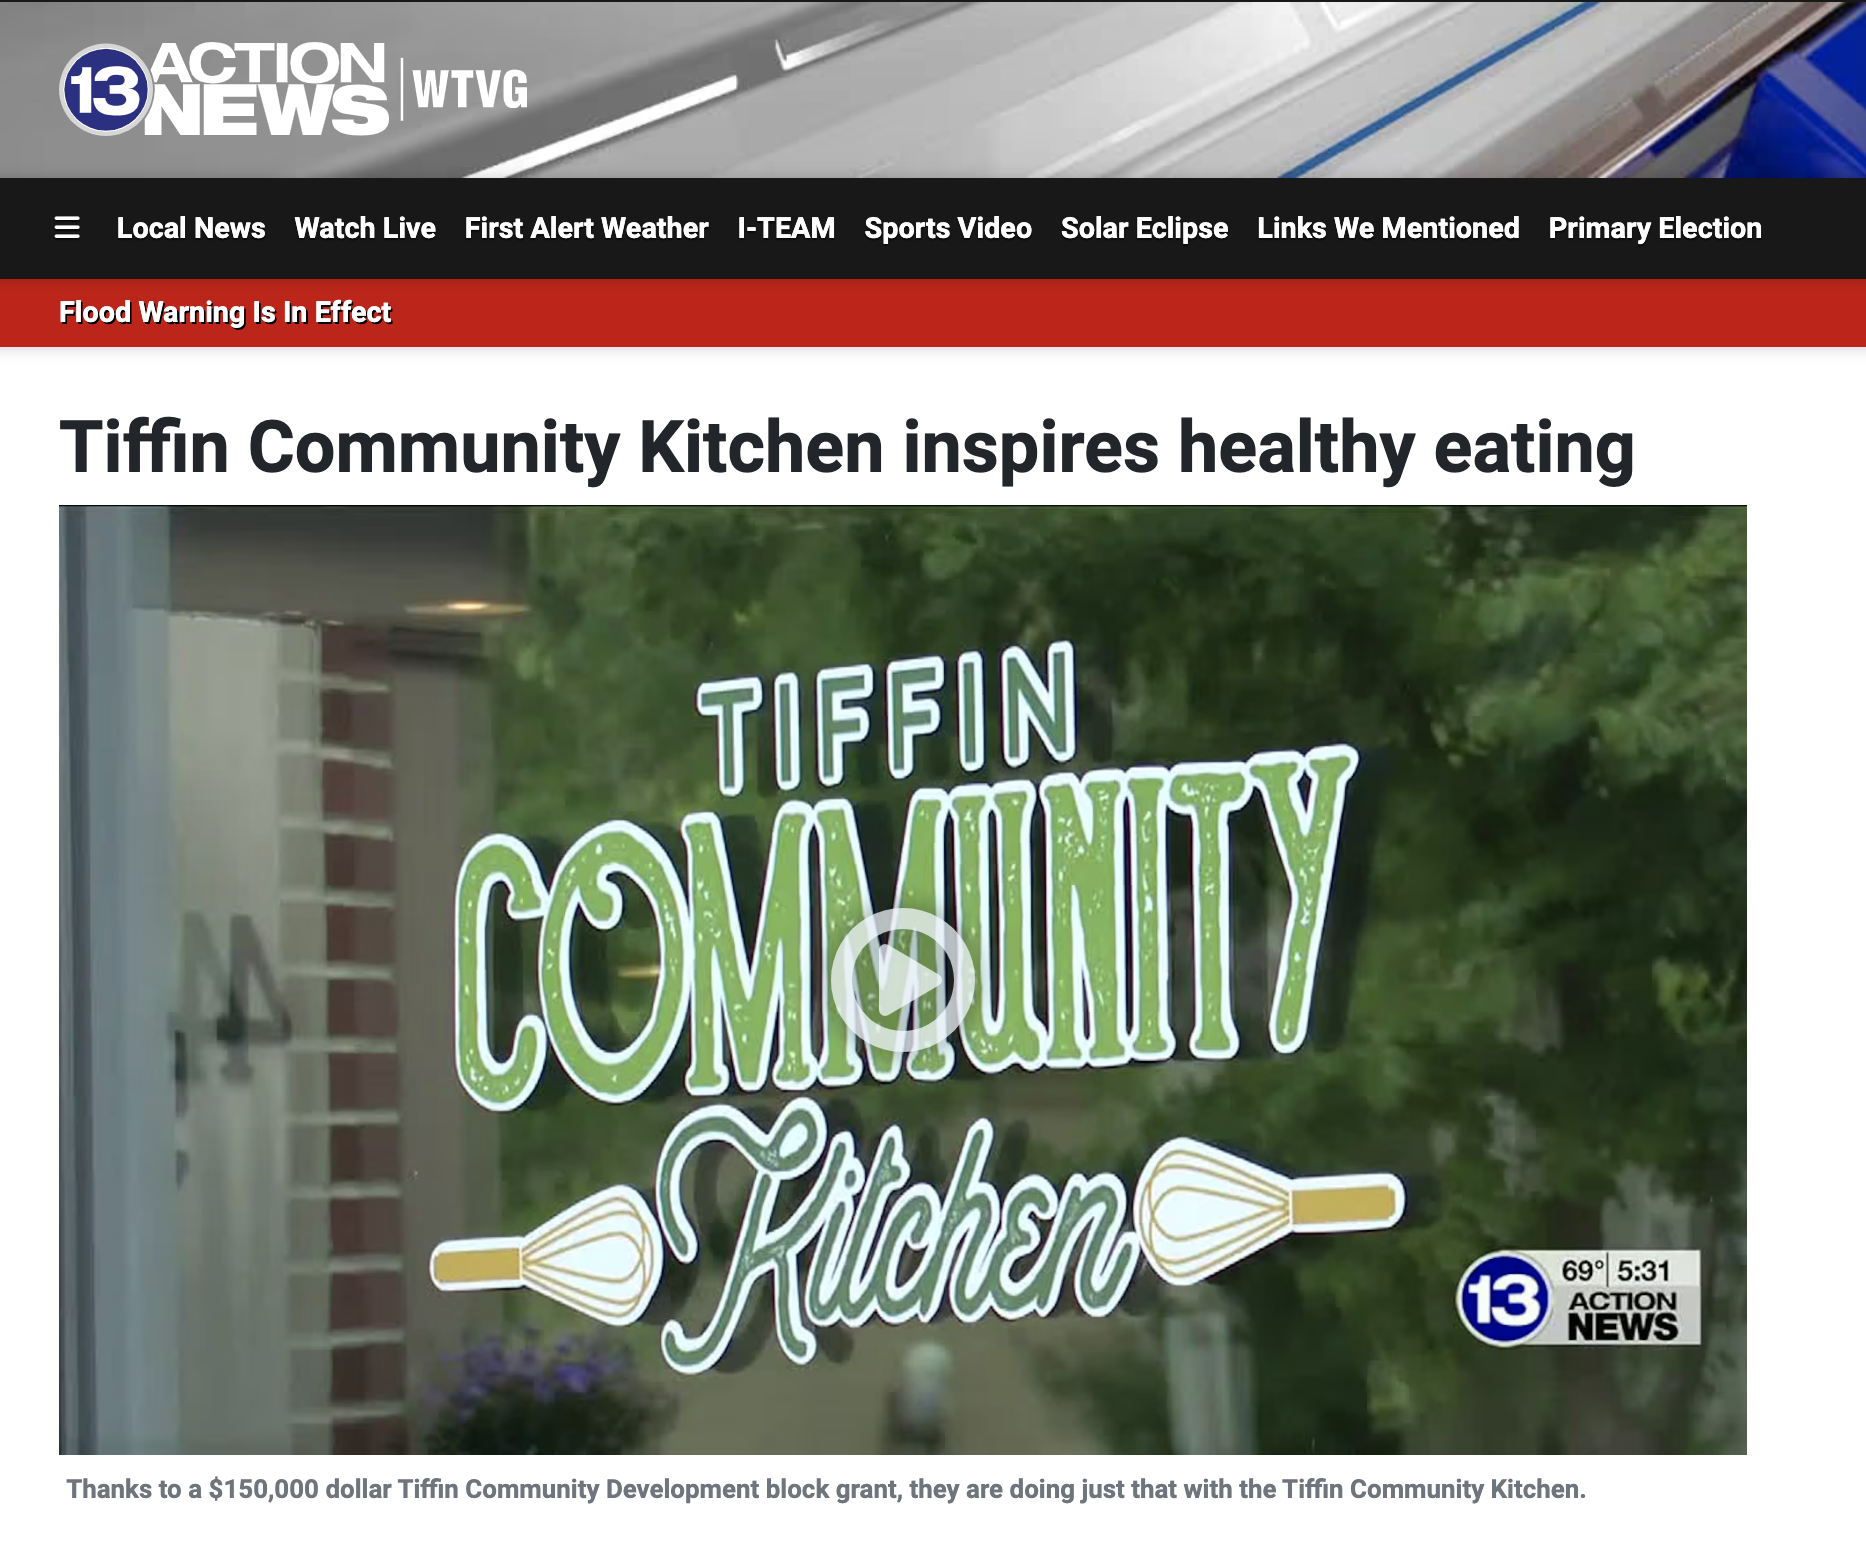 WTVG News story on Tiffin Community Kitchen